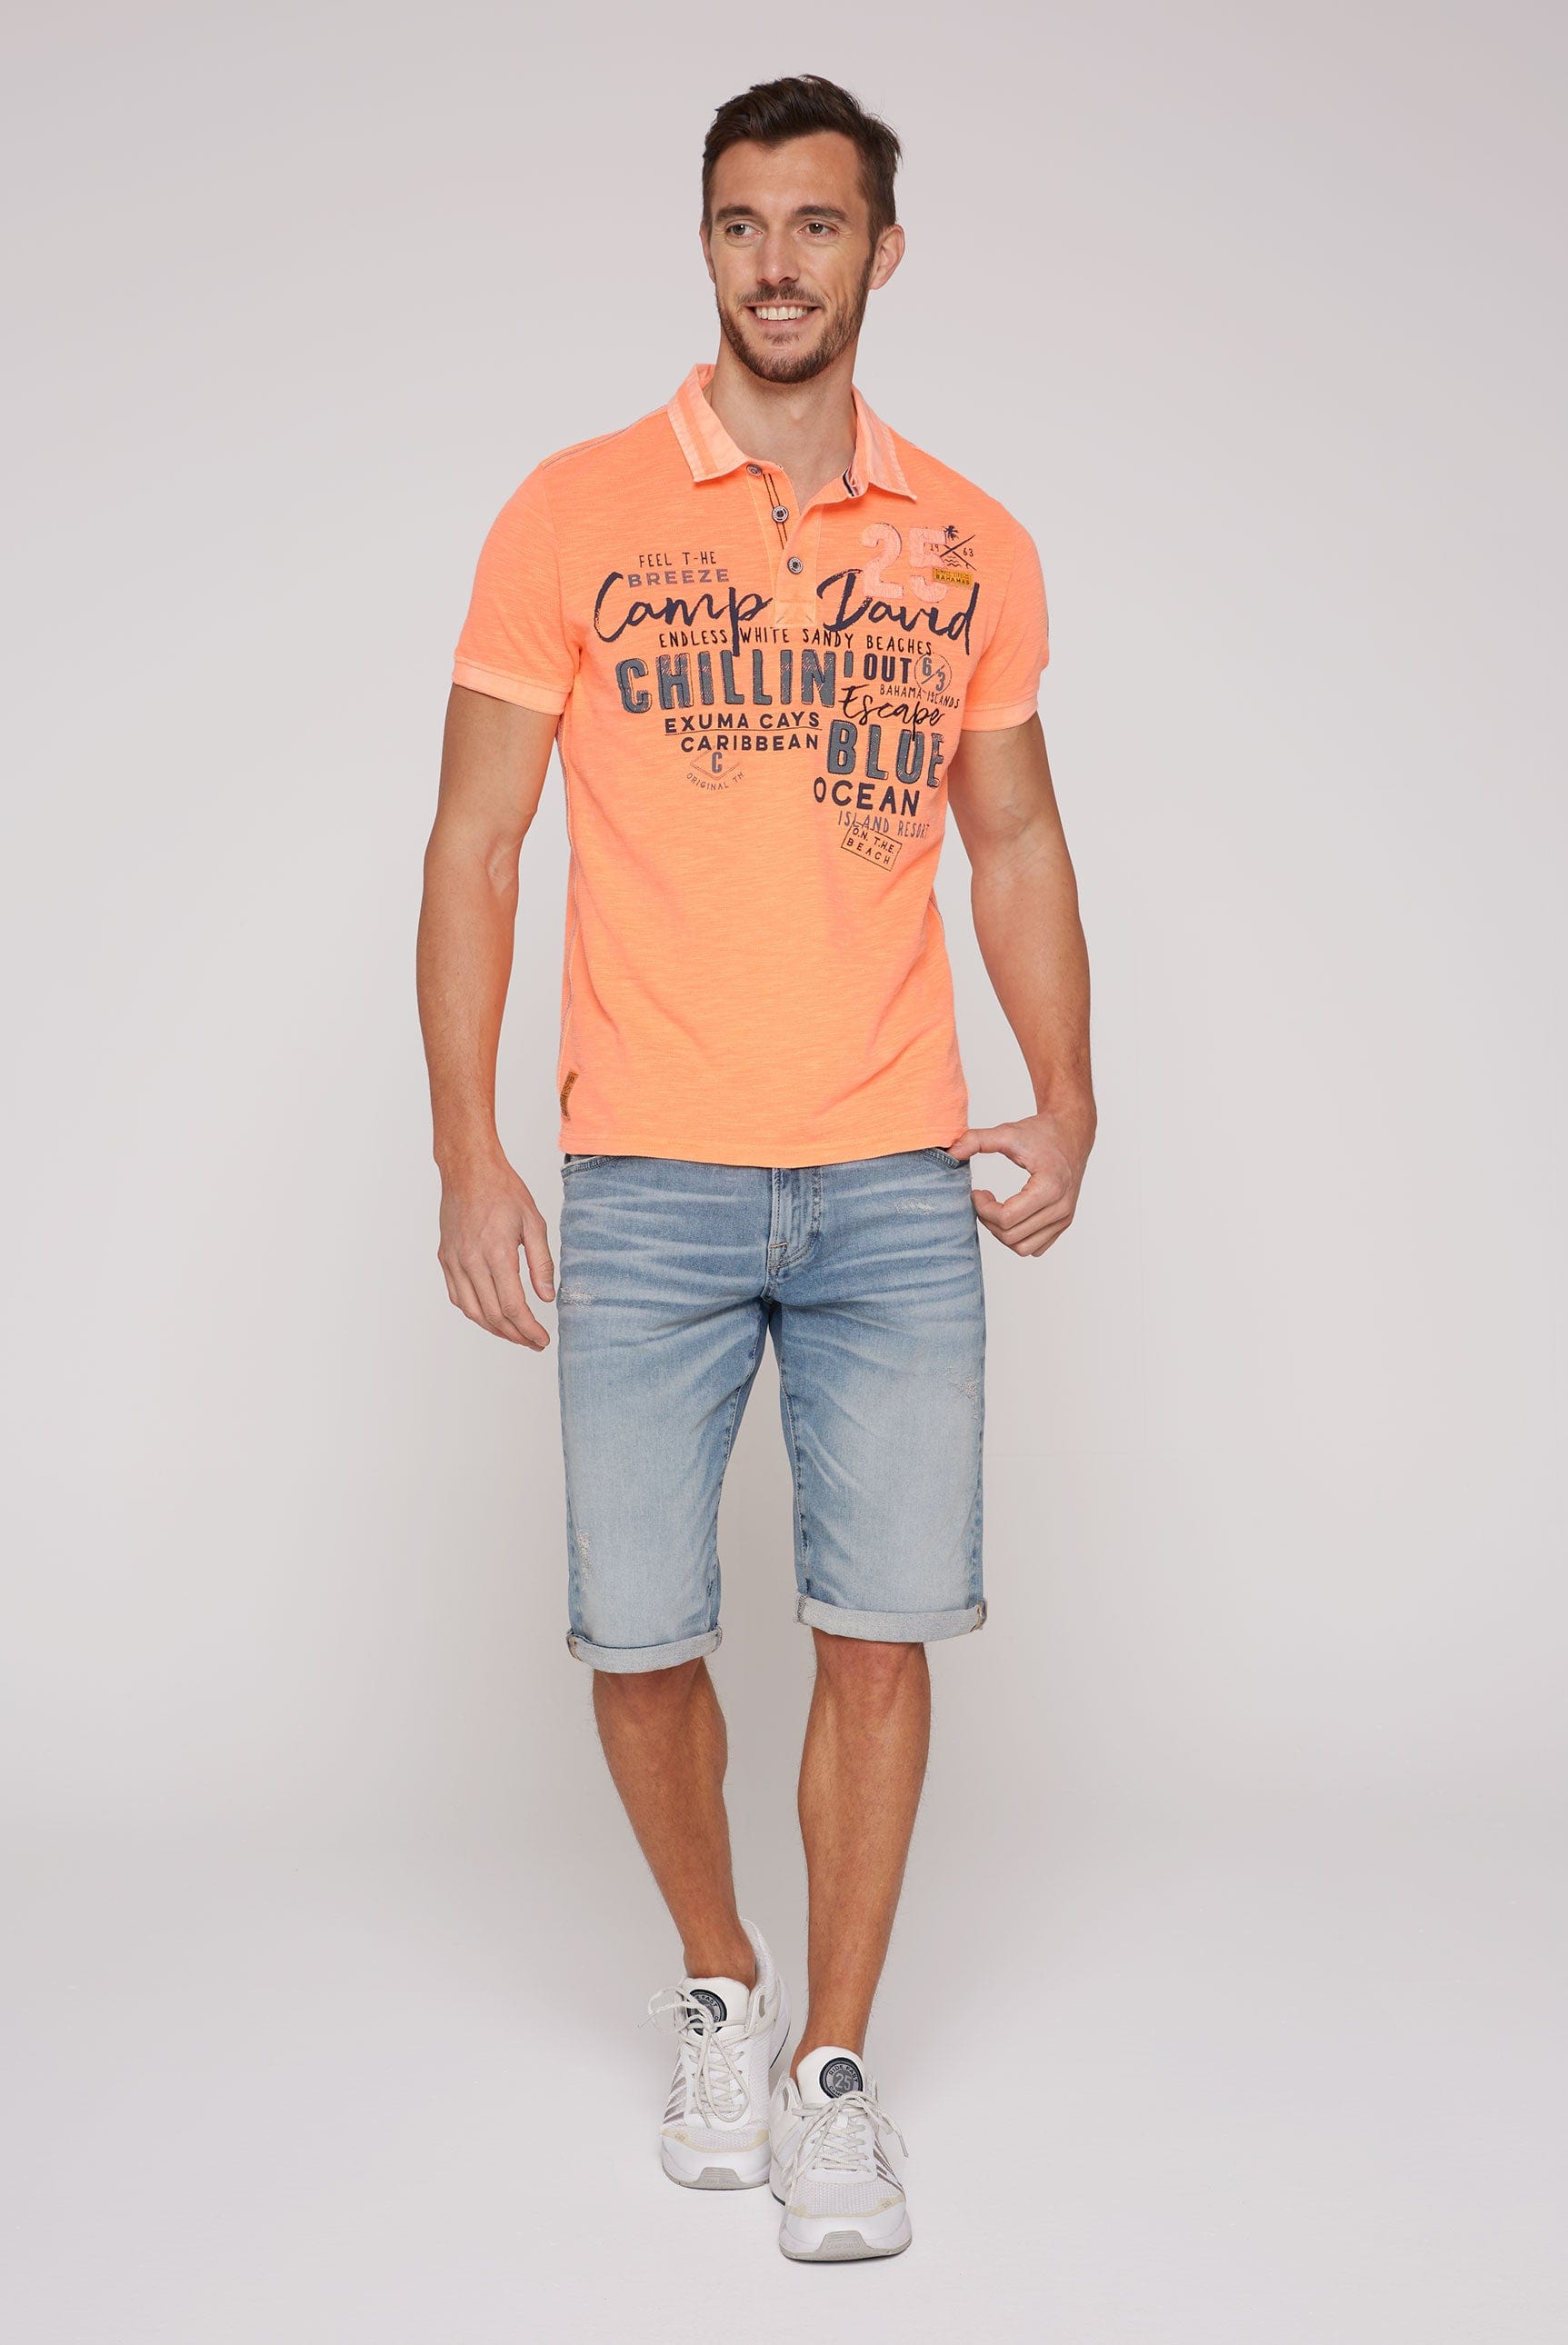 Camp David Poloshirt Cool short Life, Stateshop - Beach sleeves, Mint Fashion